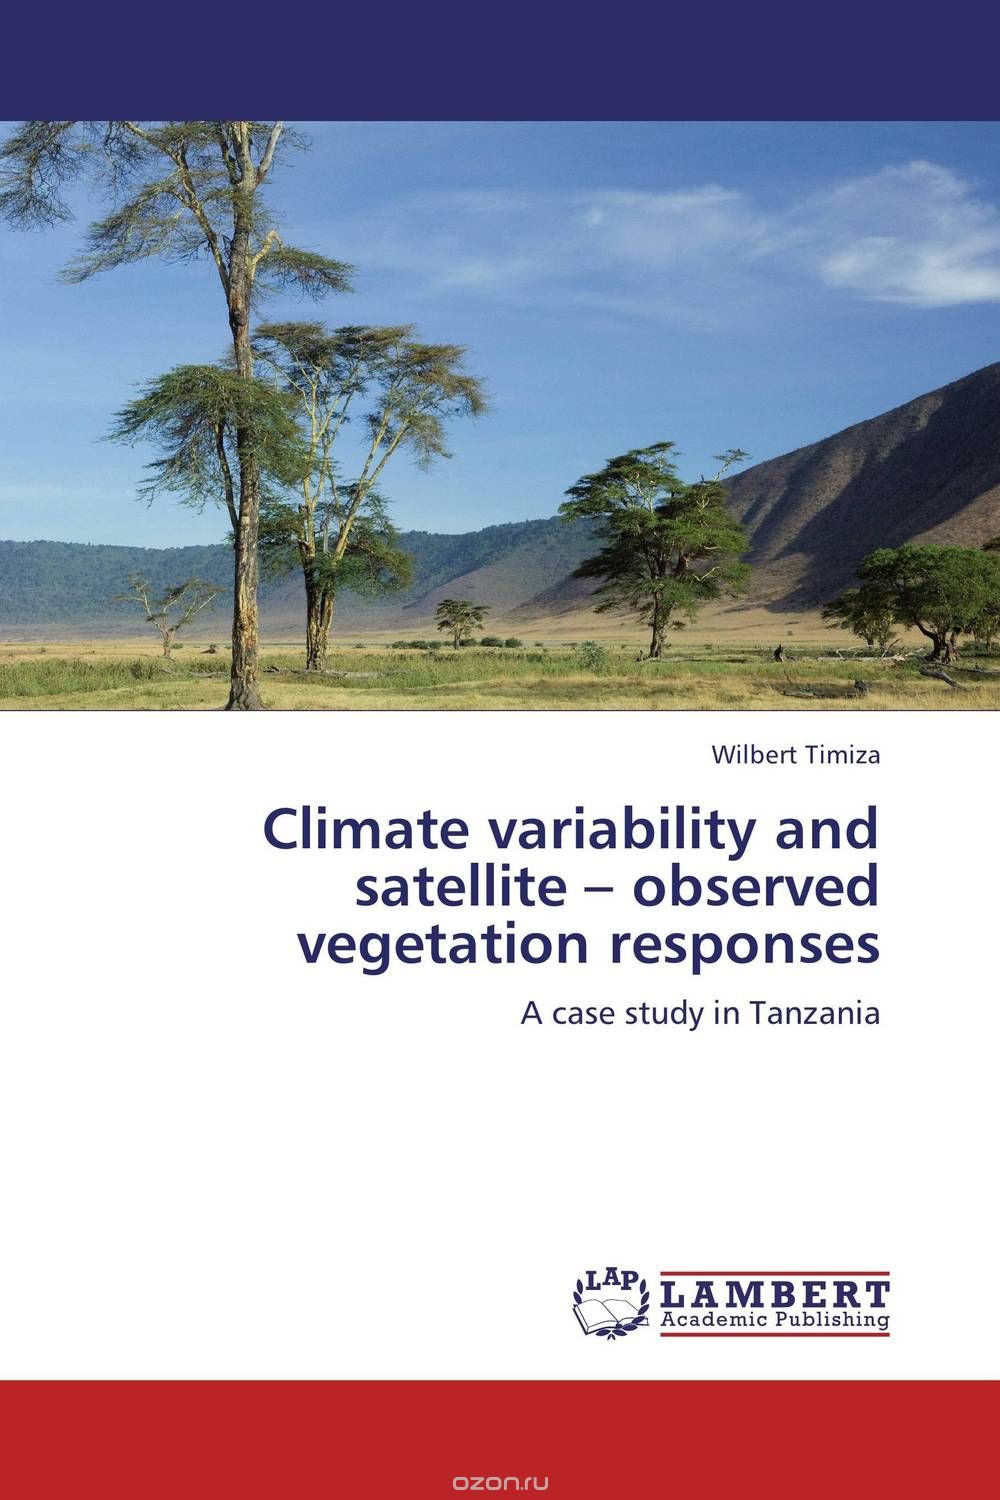 Скачать книгу "Climate variability and satellite – observed vegetation responses"